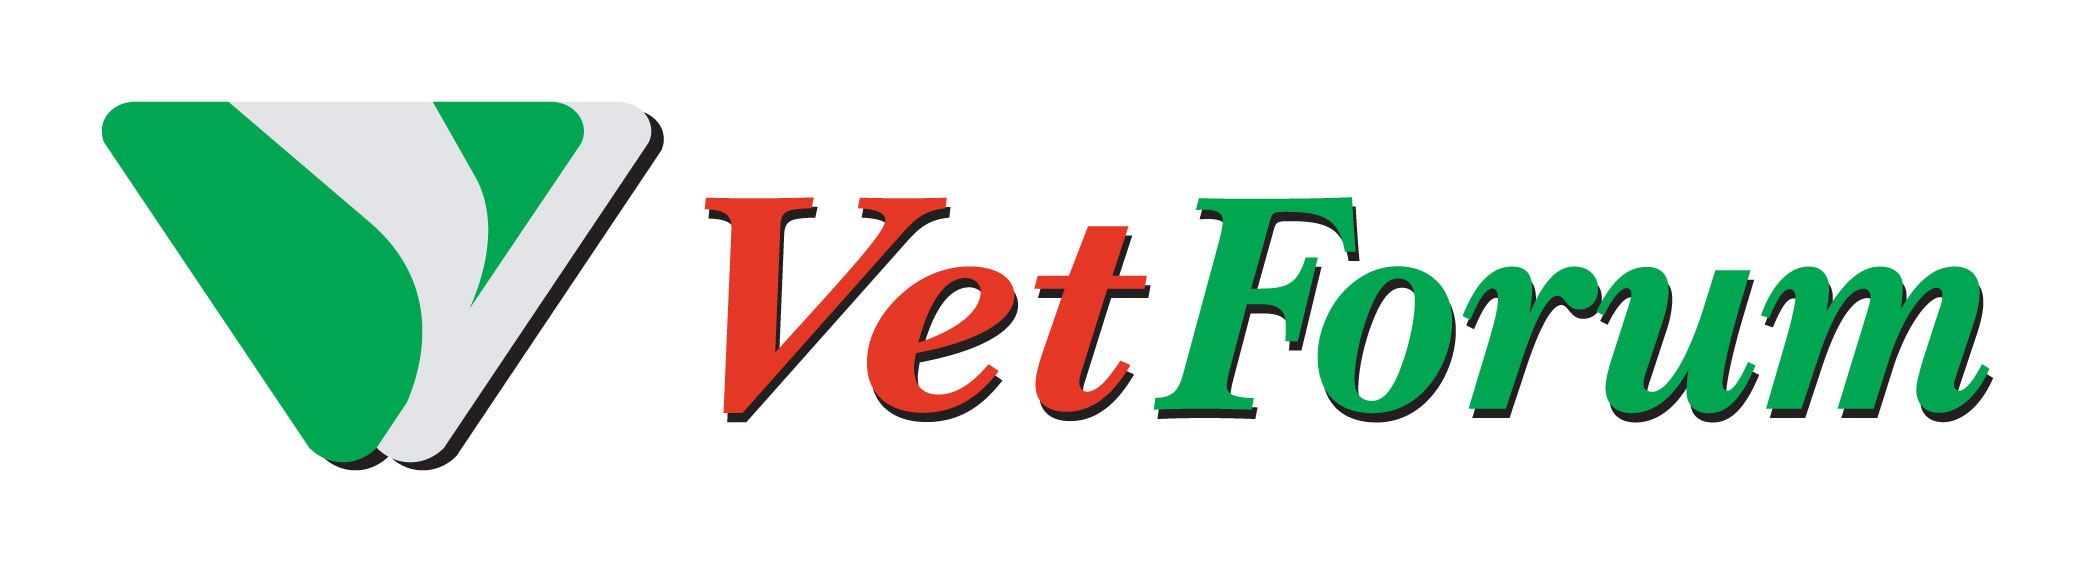 VetForum_logo.jpg